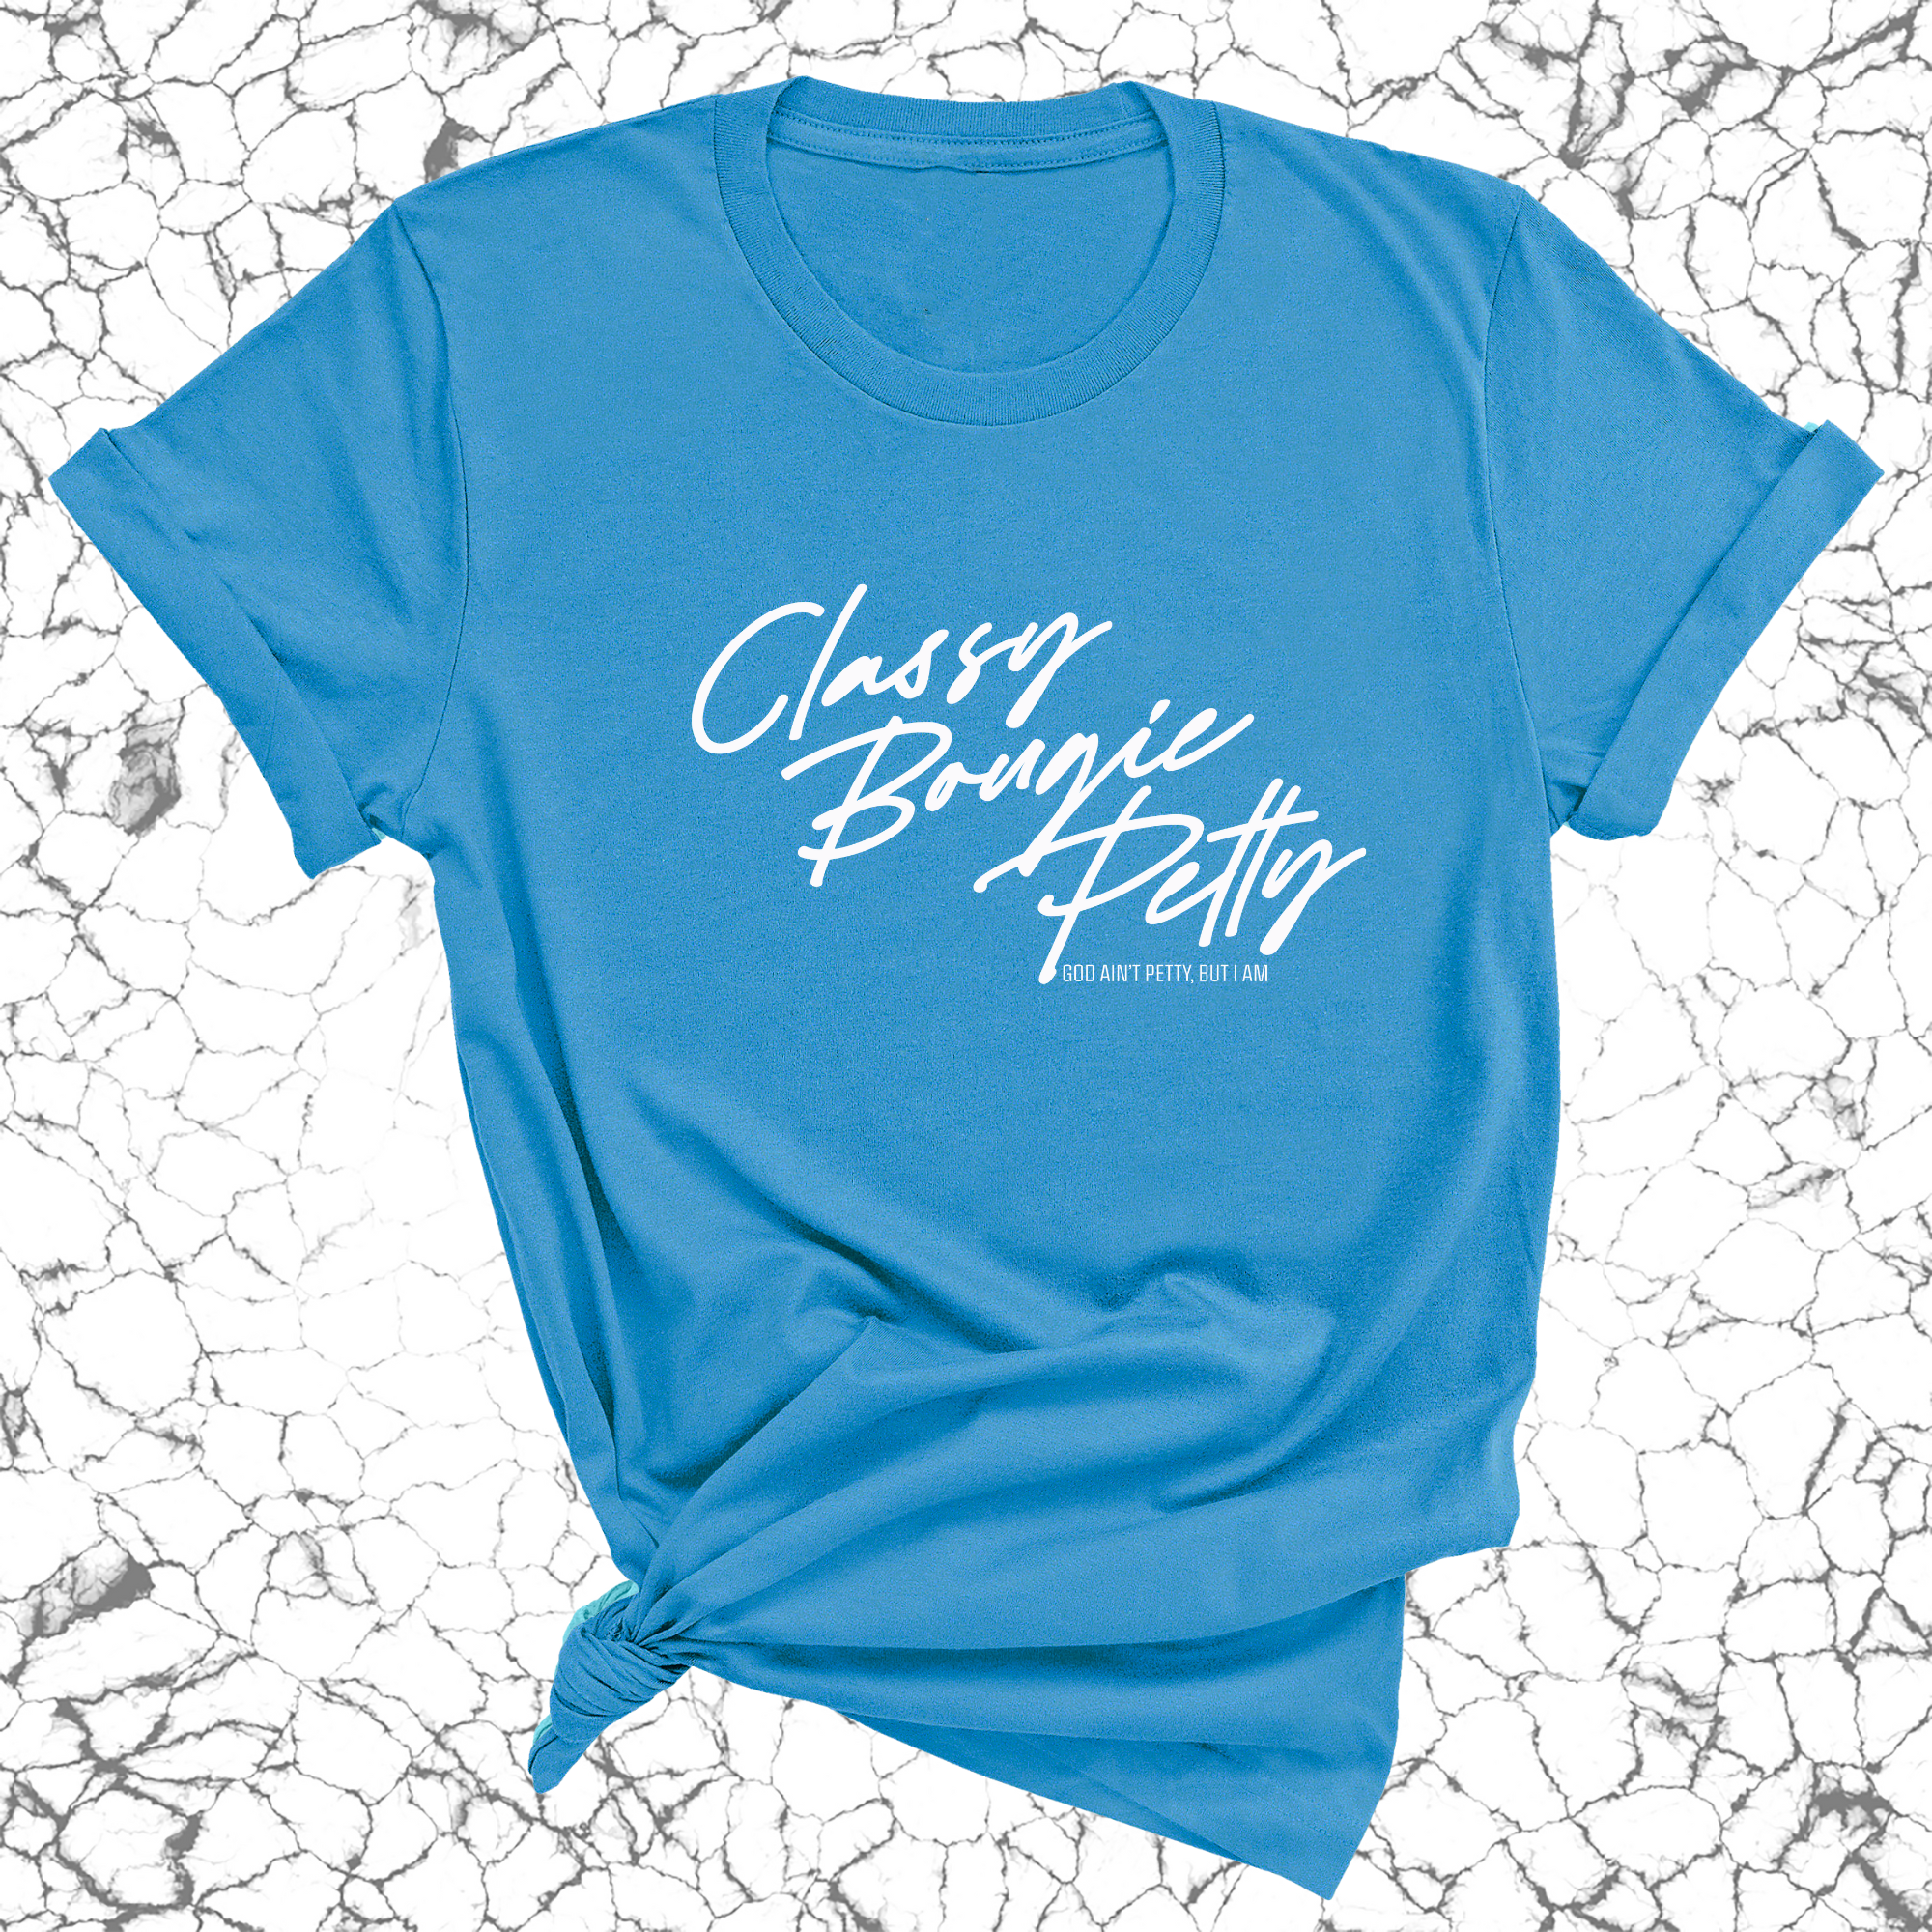 Classy Bougie Petty Unisex Tee-T-Shirt-The Original God Ain't Petty But I Am